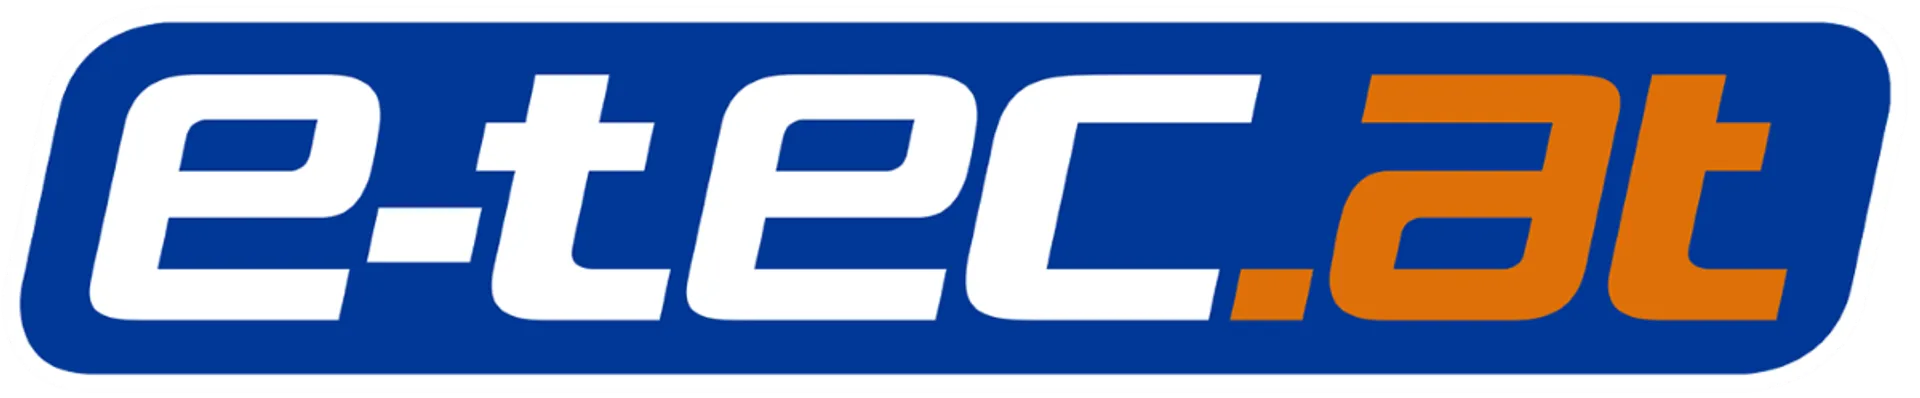 E-TEC logo die aktuell Flugblatt